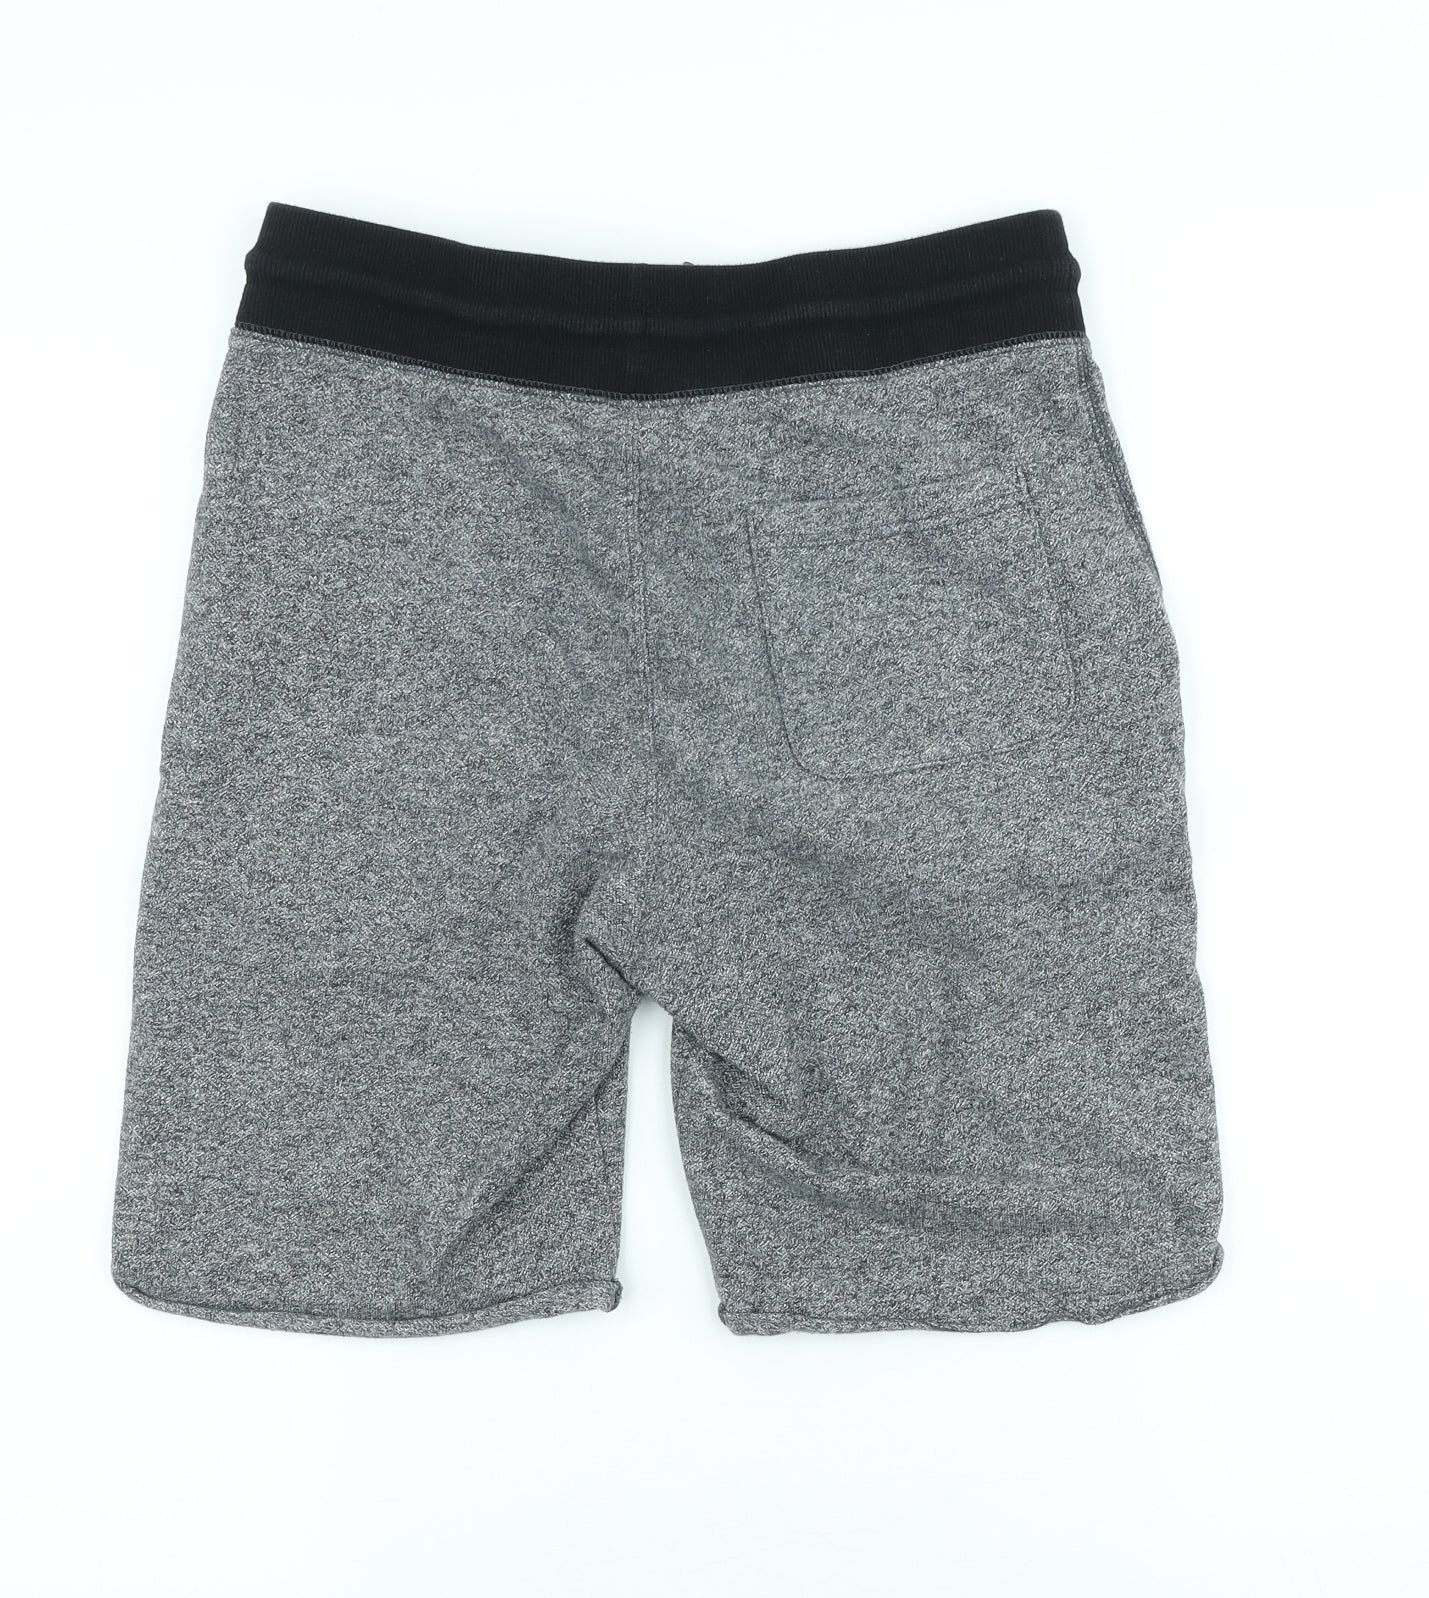 L.O.G.G Boys Grey Cotton Sweat Shorts Size 13-14 Years Regular